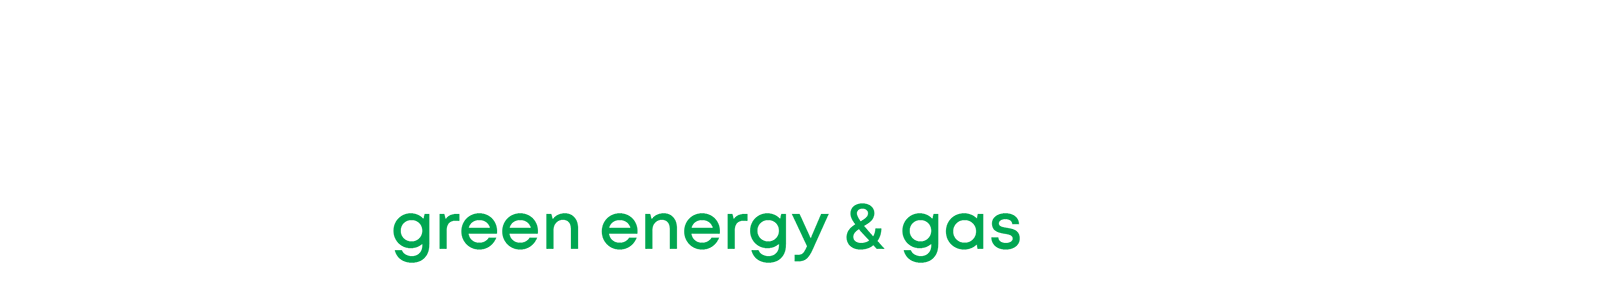 boryszew.energy